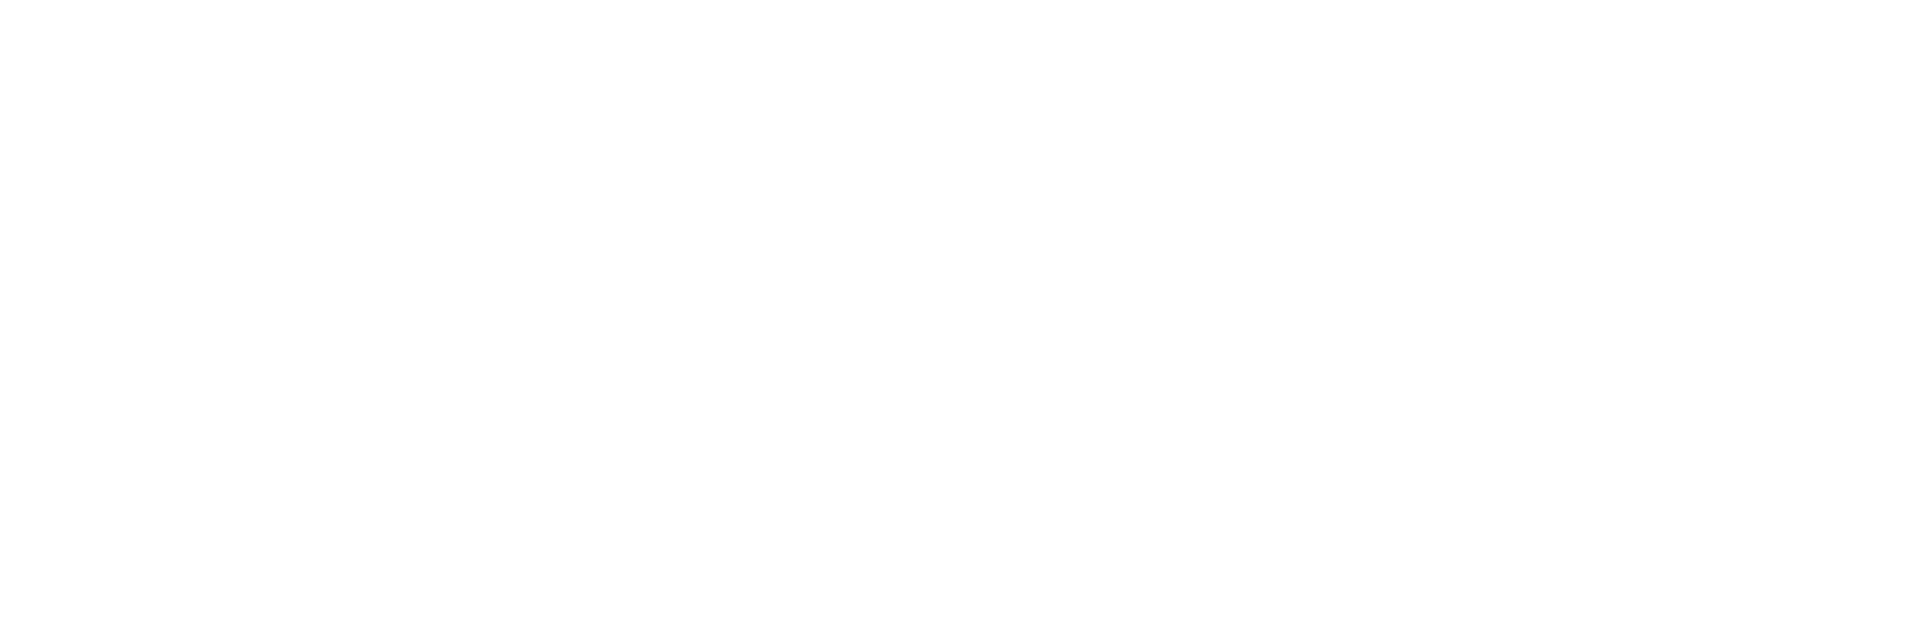 solomon consulting services logo